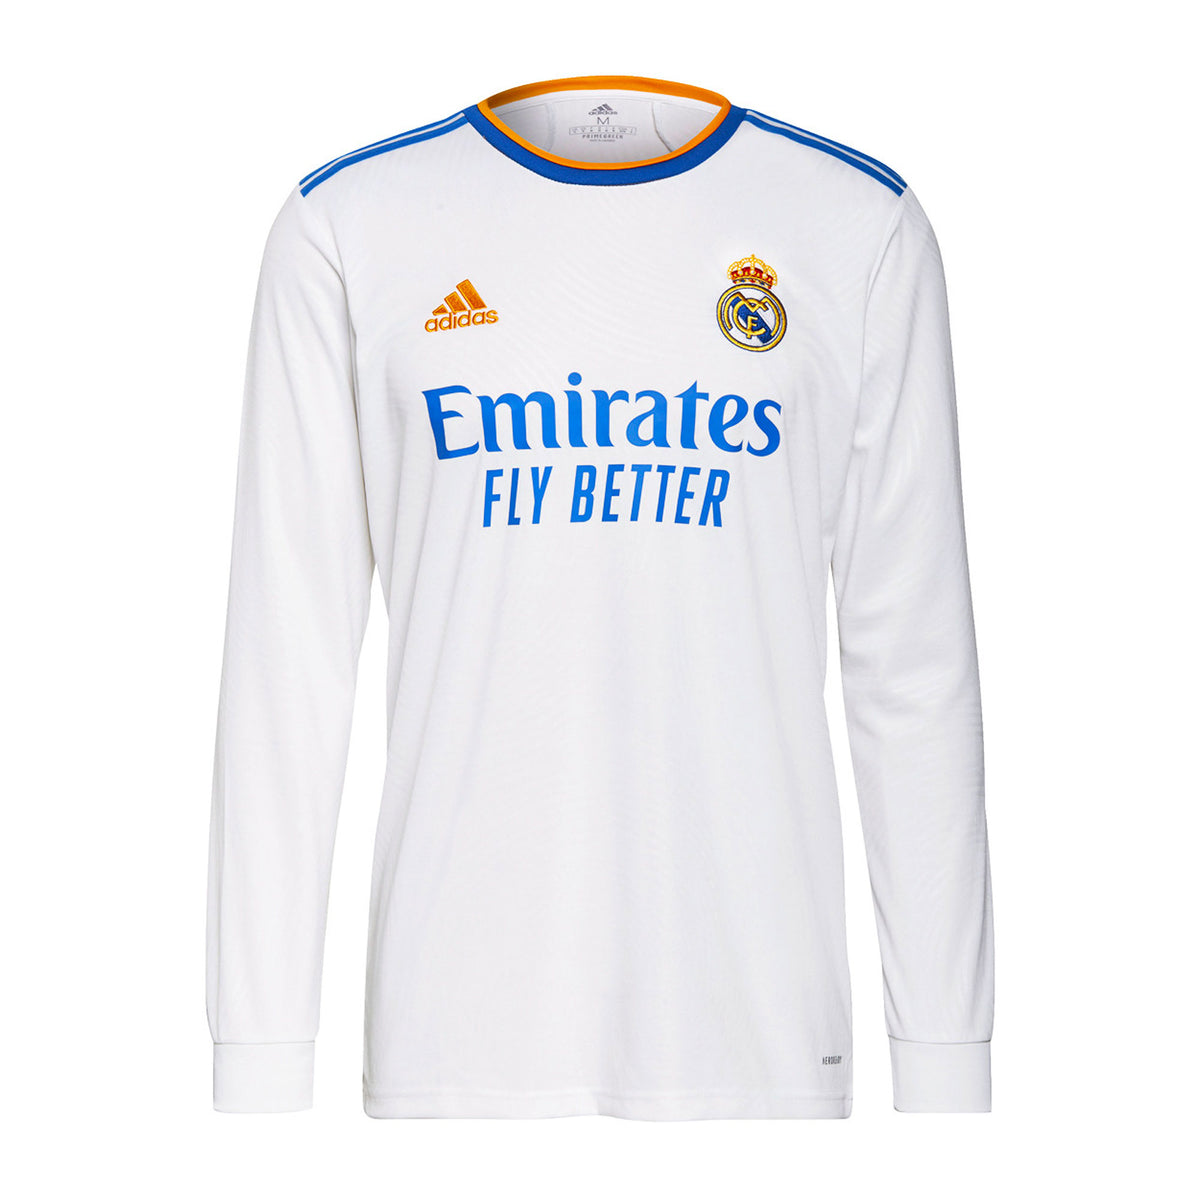 Adidas Real Madrid Home 21-22 soccer jersey White Blue Orange Size L Men 